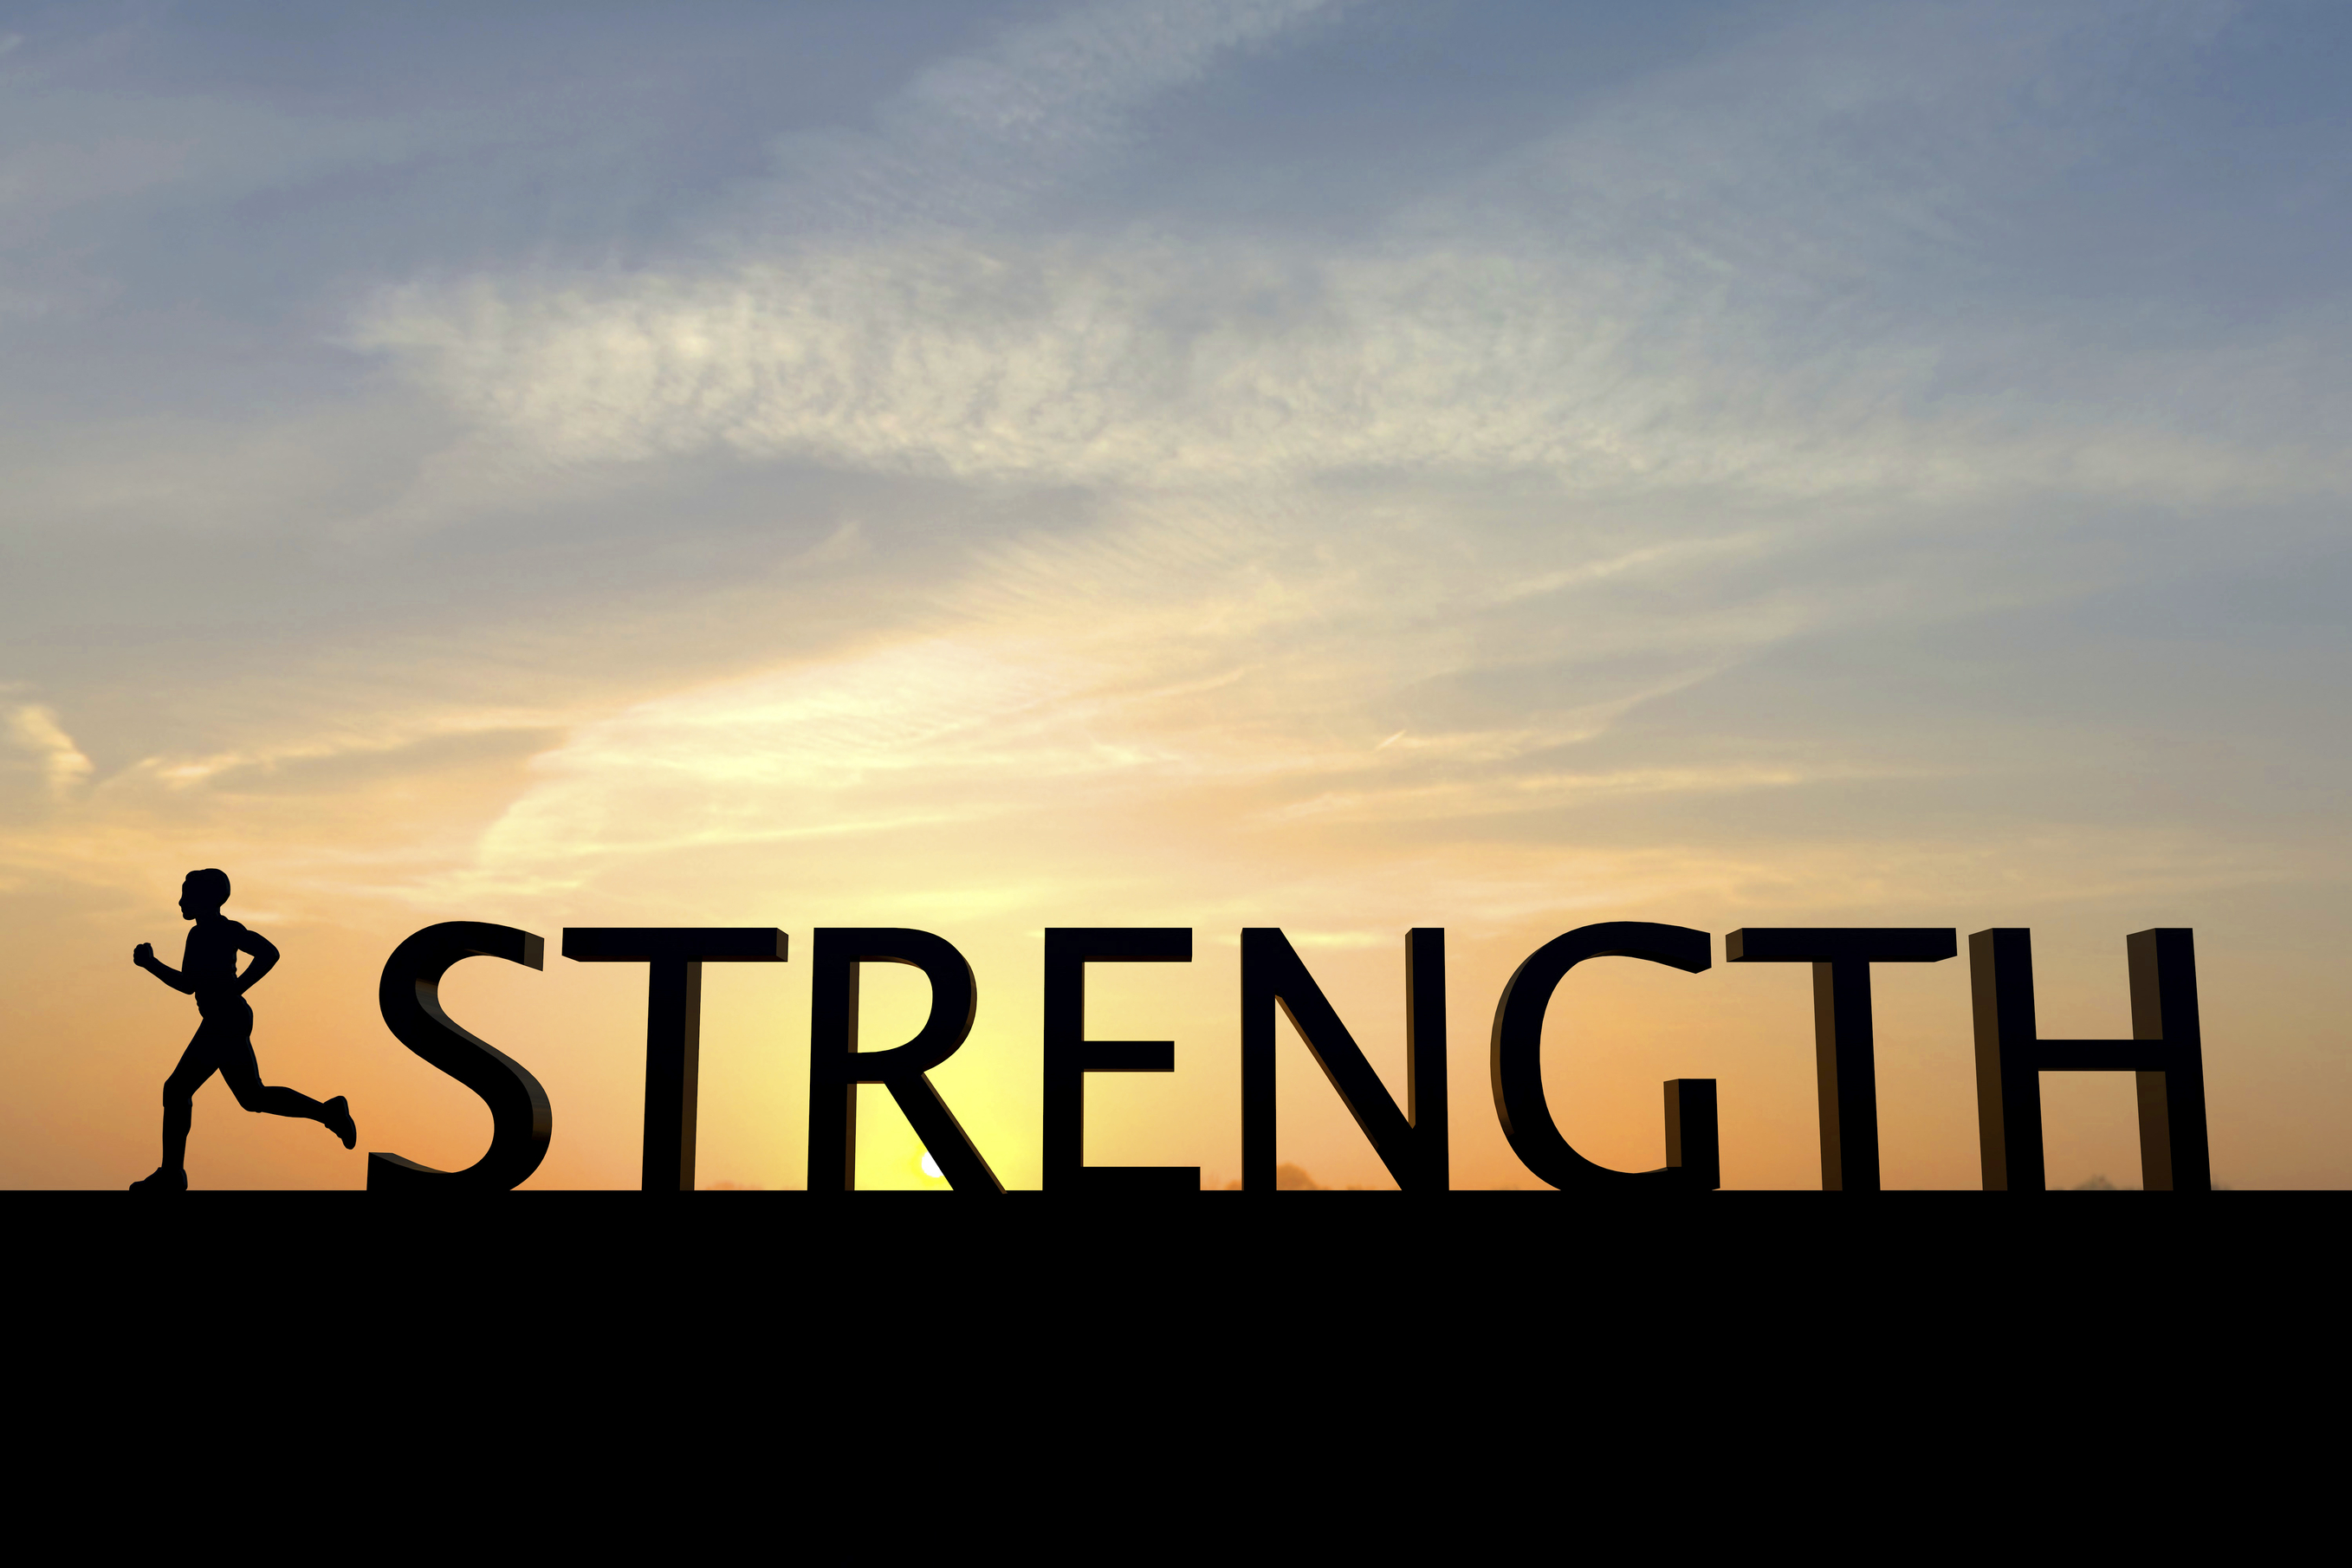 strength_word_silhouette.jpg